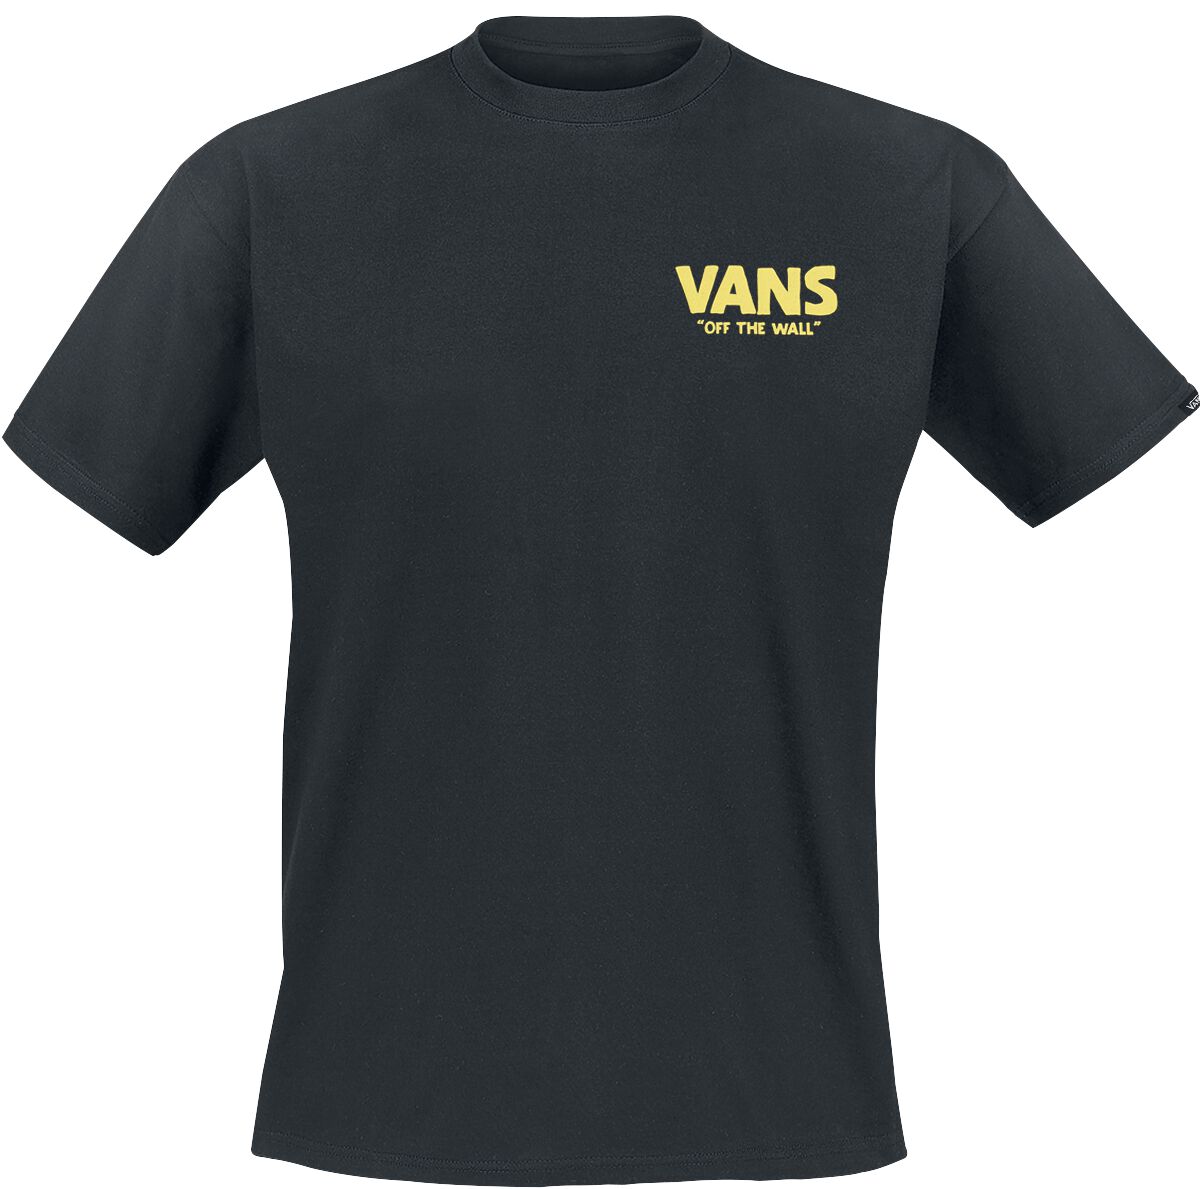 Vans Stay Cool Tee T-Shirt schwarz in XL